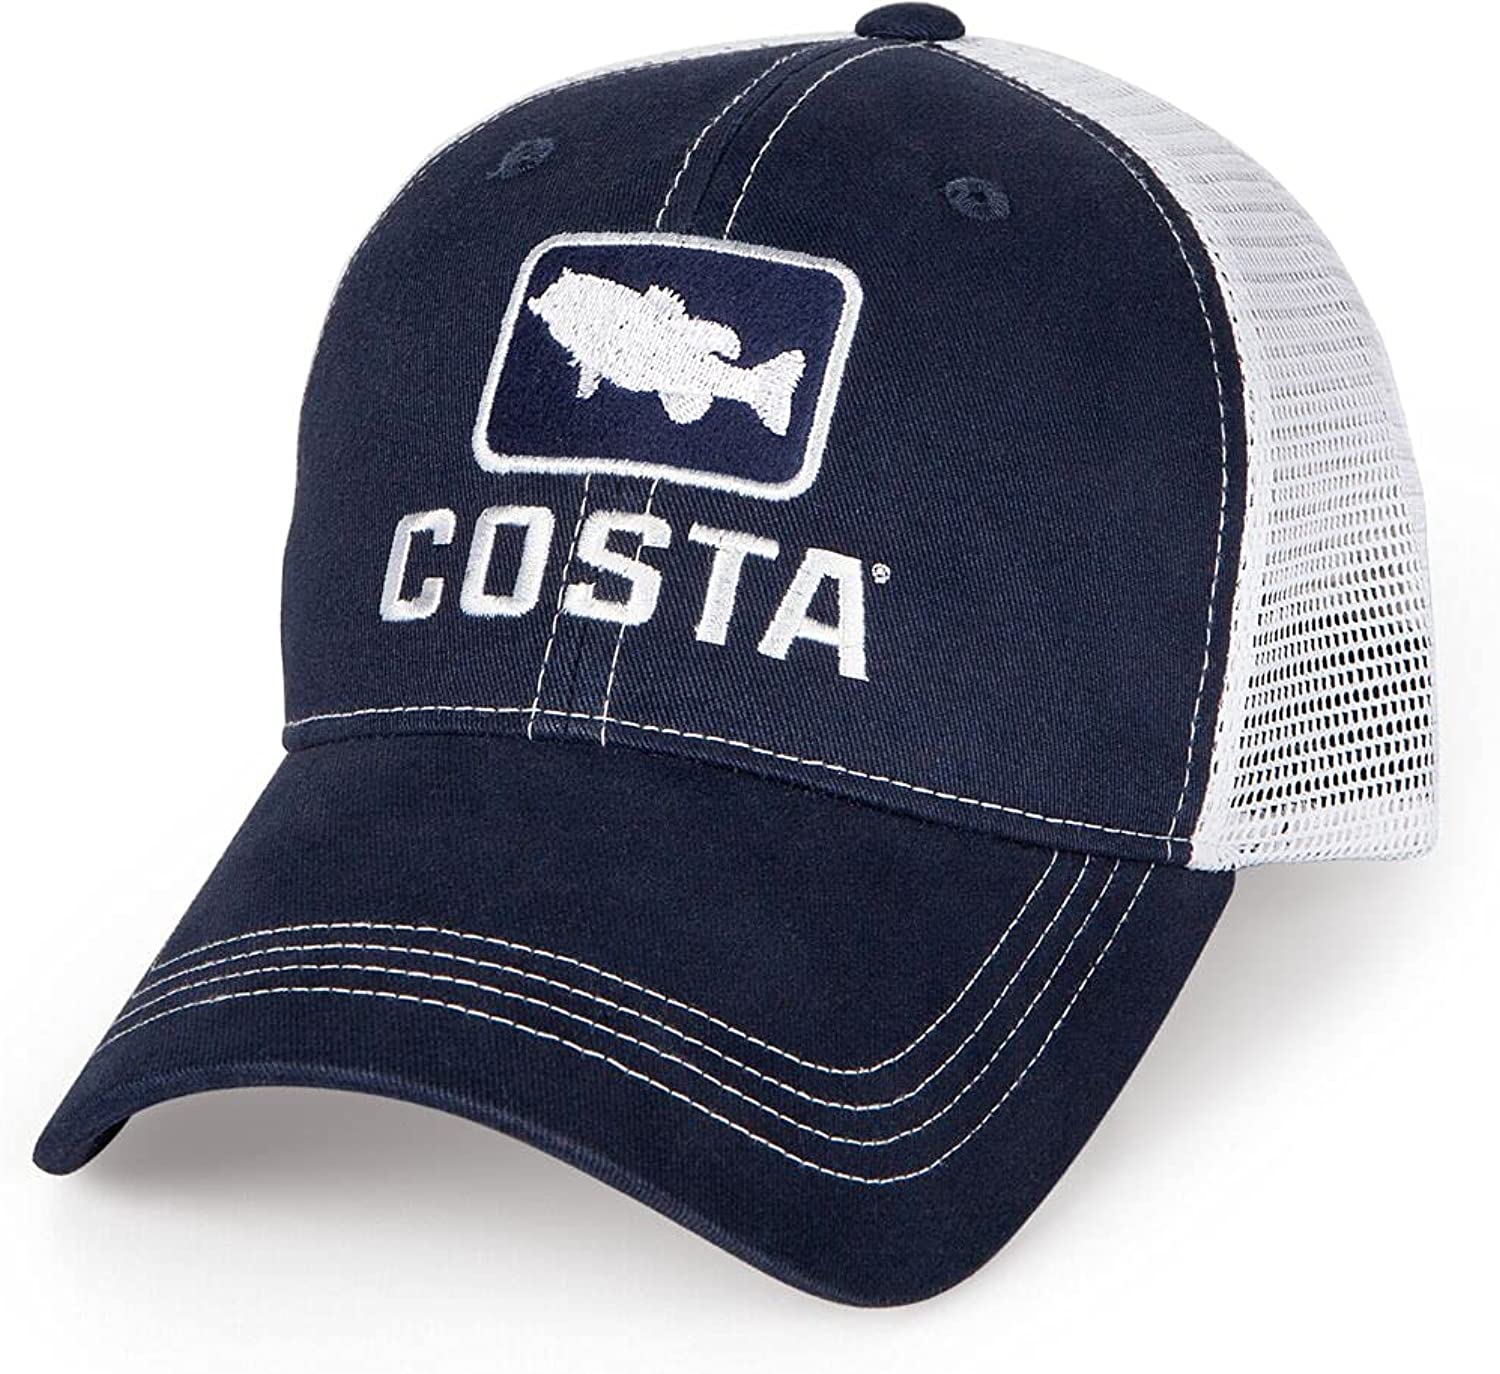 Costa Del Mar Bass Trucker Hat